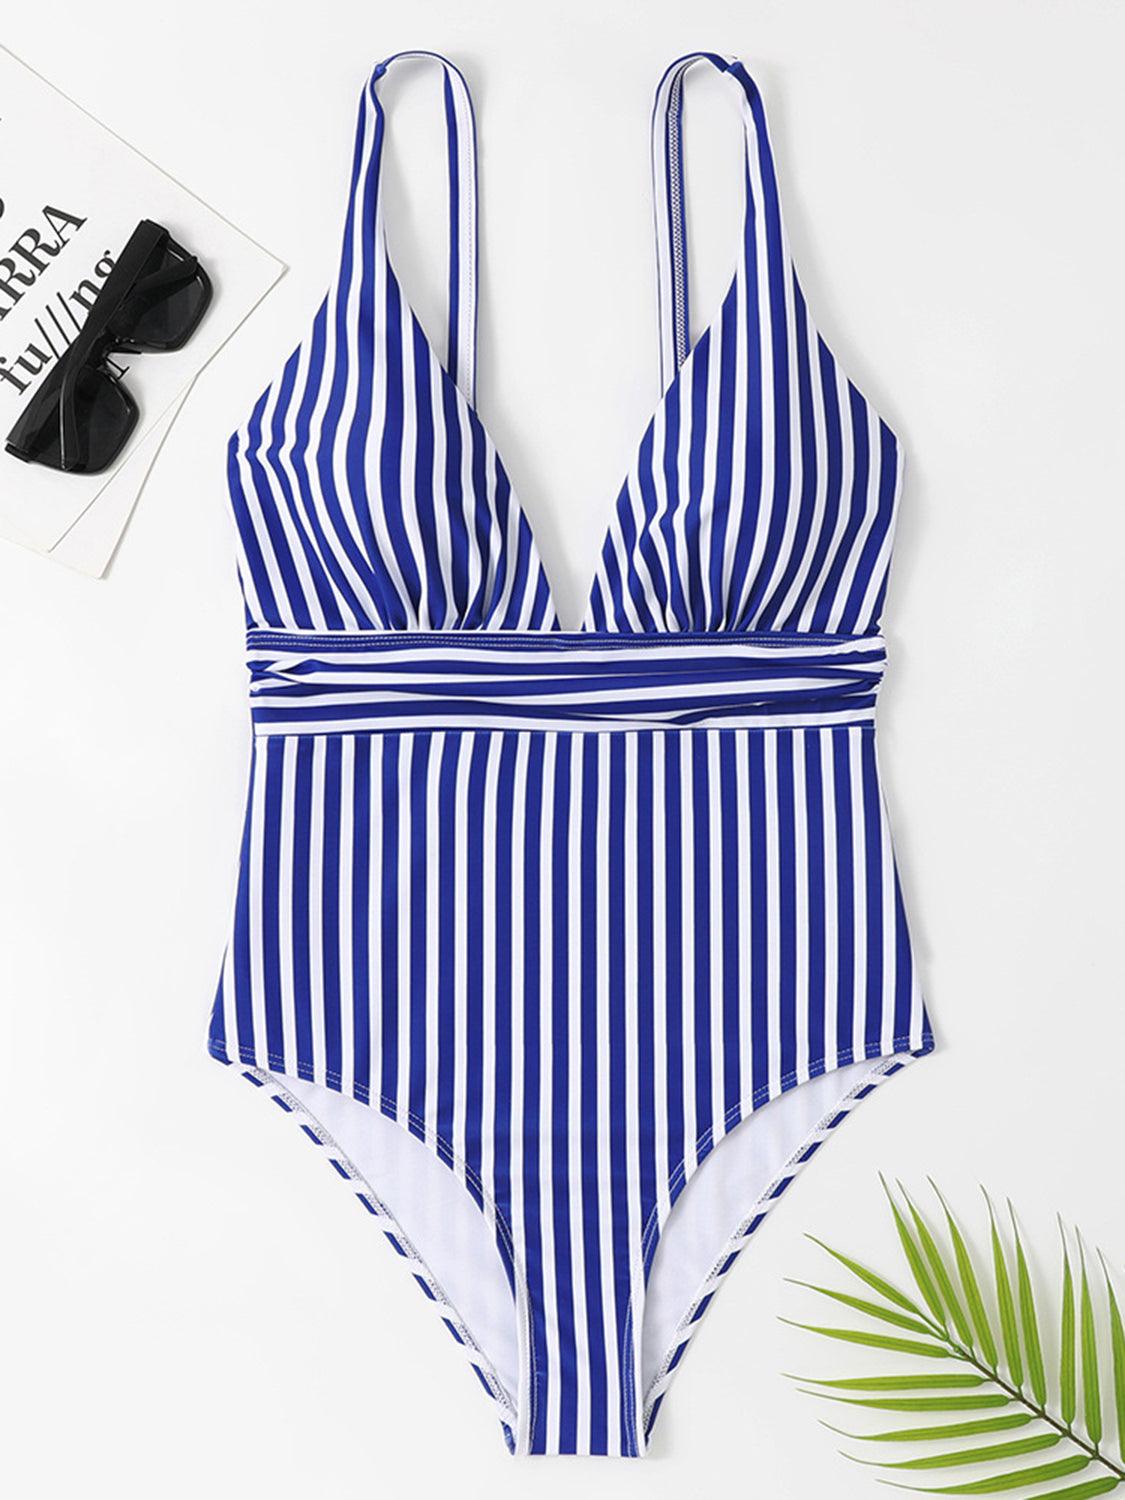 Bona Fide Fashion - Striped Plunge Sleeveless One-Piece Swimwear - Women Fashion - Bona Fide Fashion